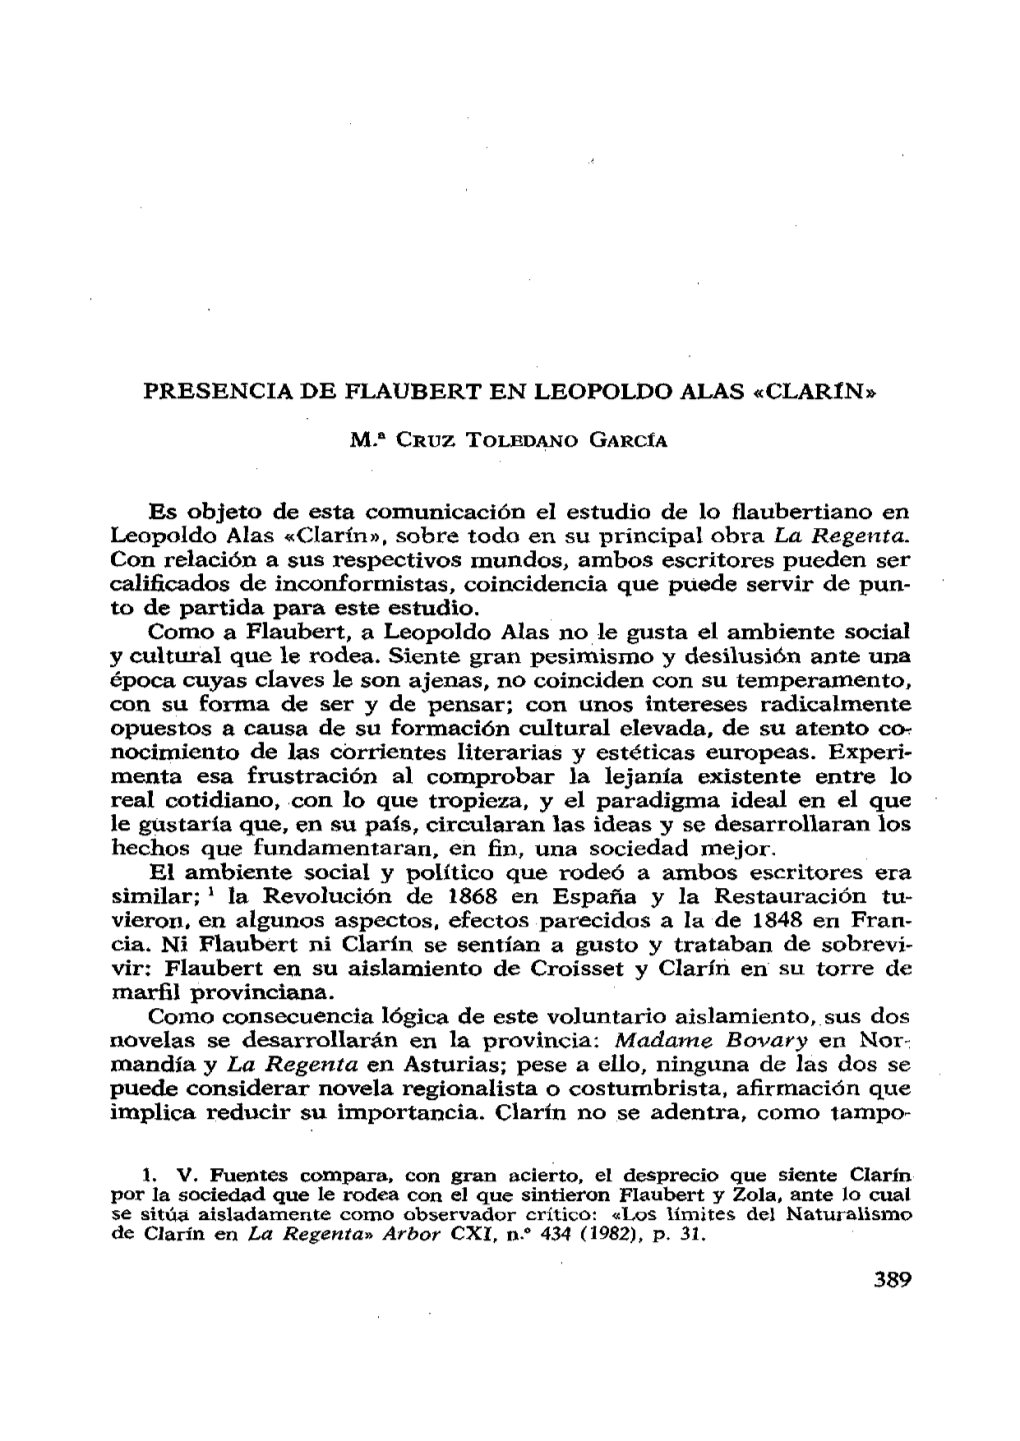 Presencia De Flaubert En Leopoldo Alas "Clarín"